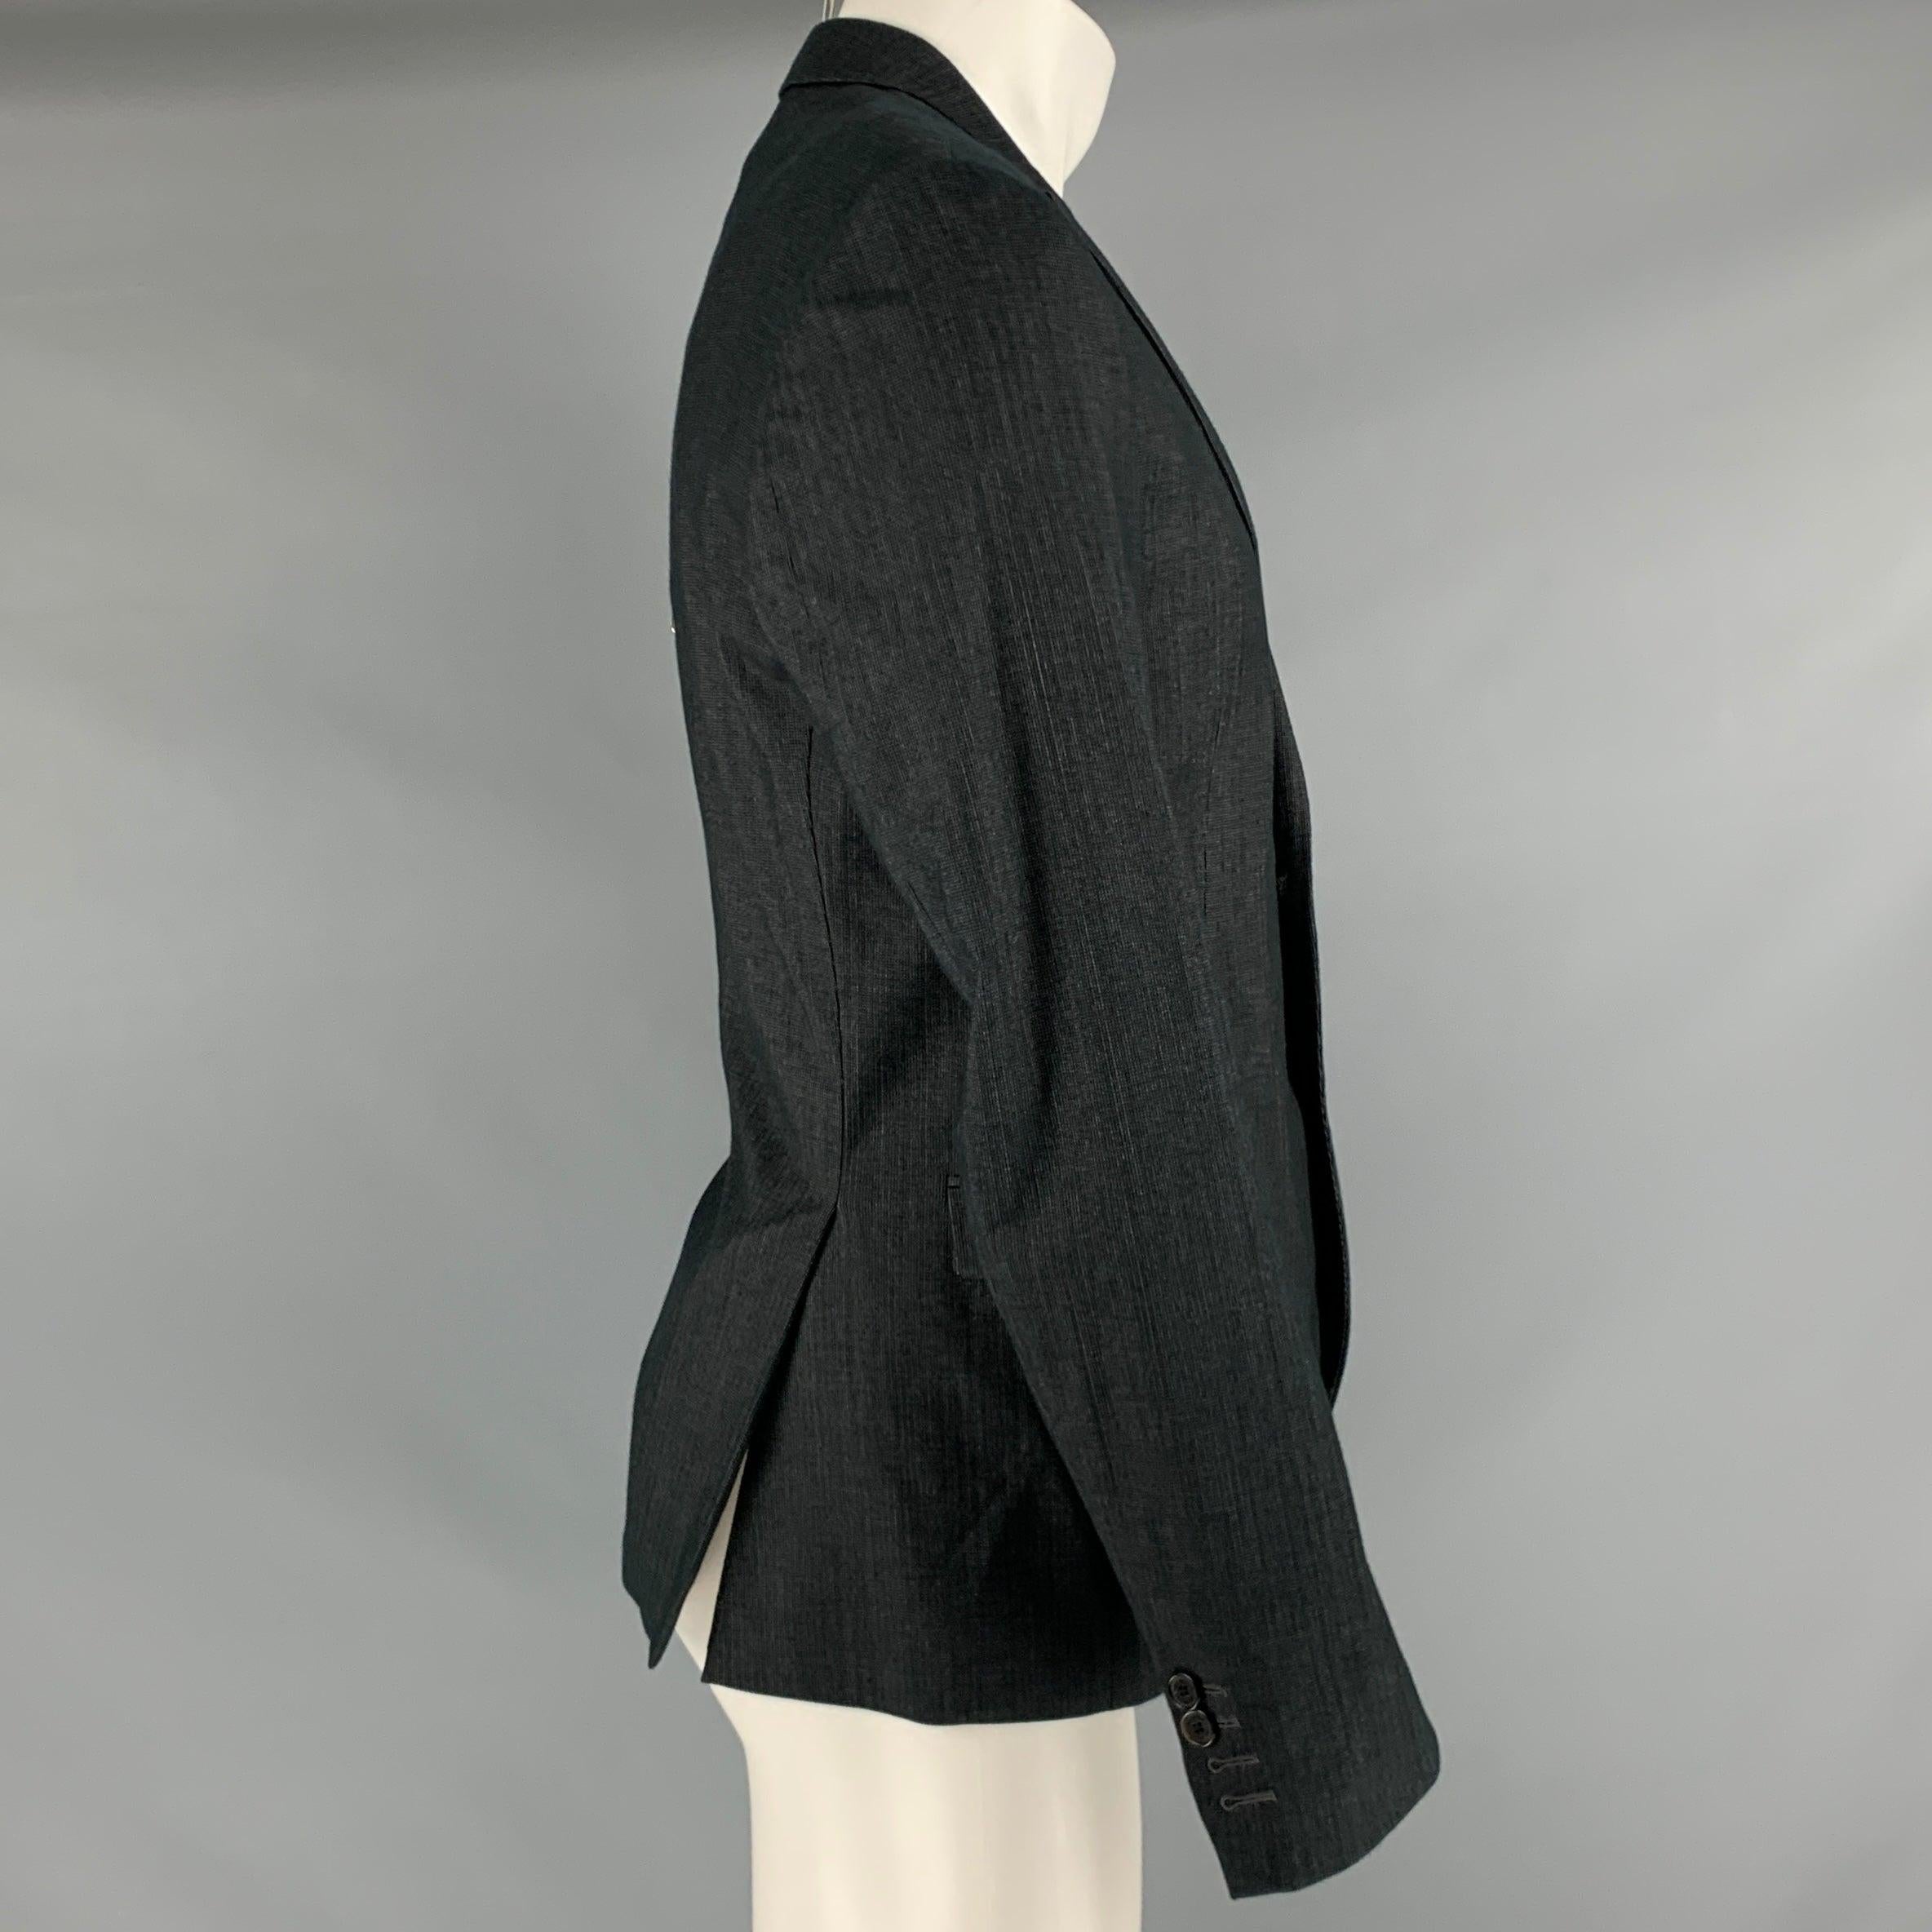 NEIL BARRETT Size 38 Charcoal Black Grid Wool Blend Peak Lapel Sport Coat In Excellent Condition For Sale In San Francisco, CA